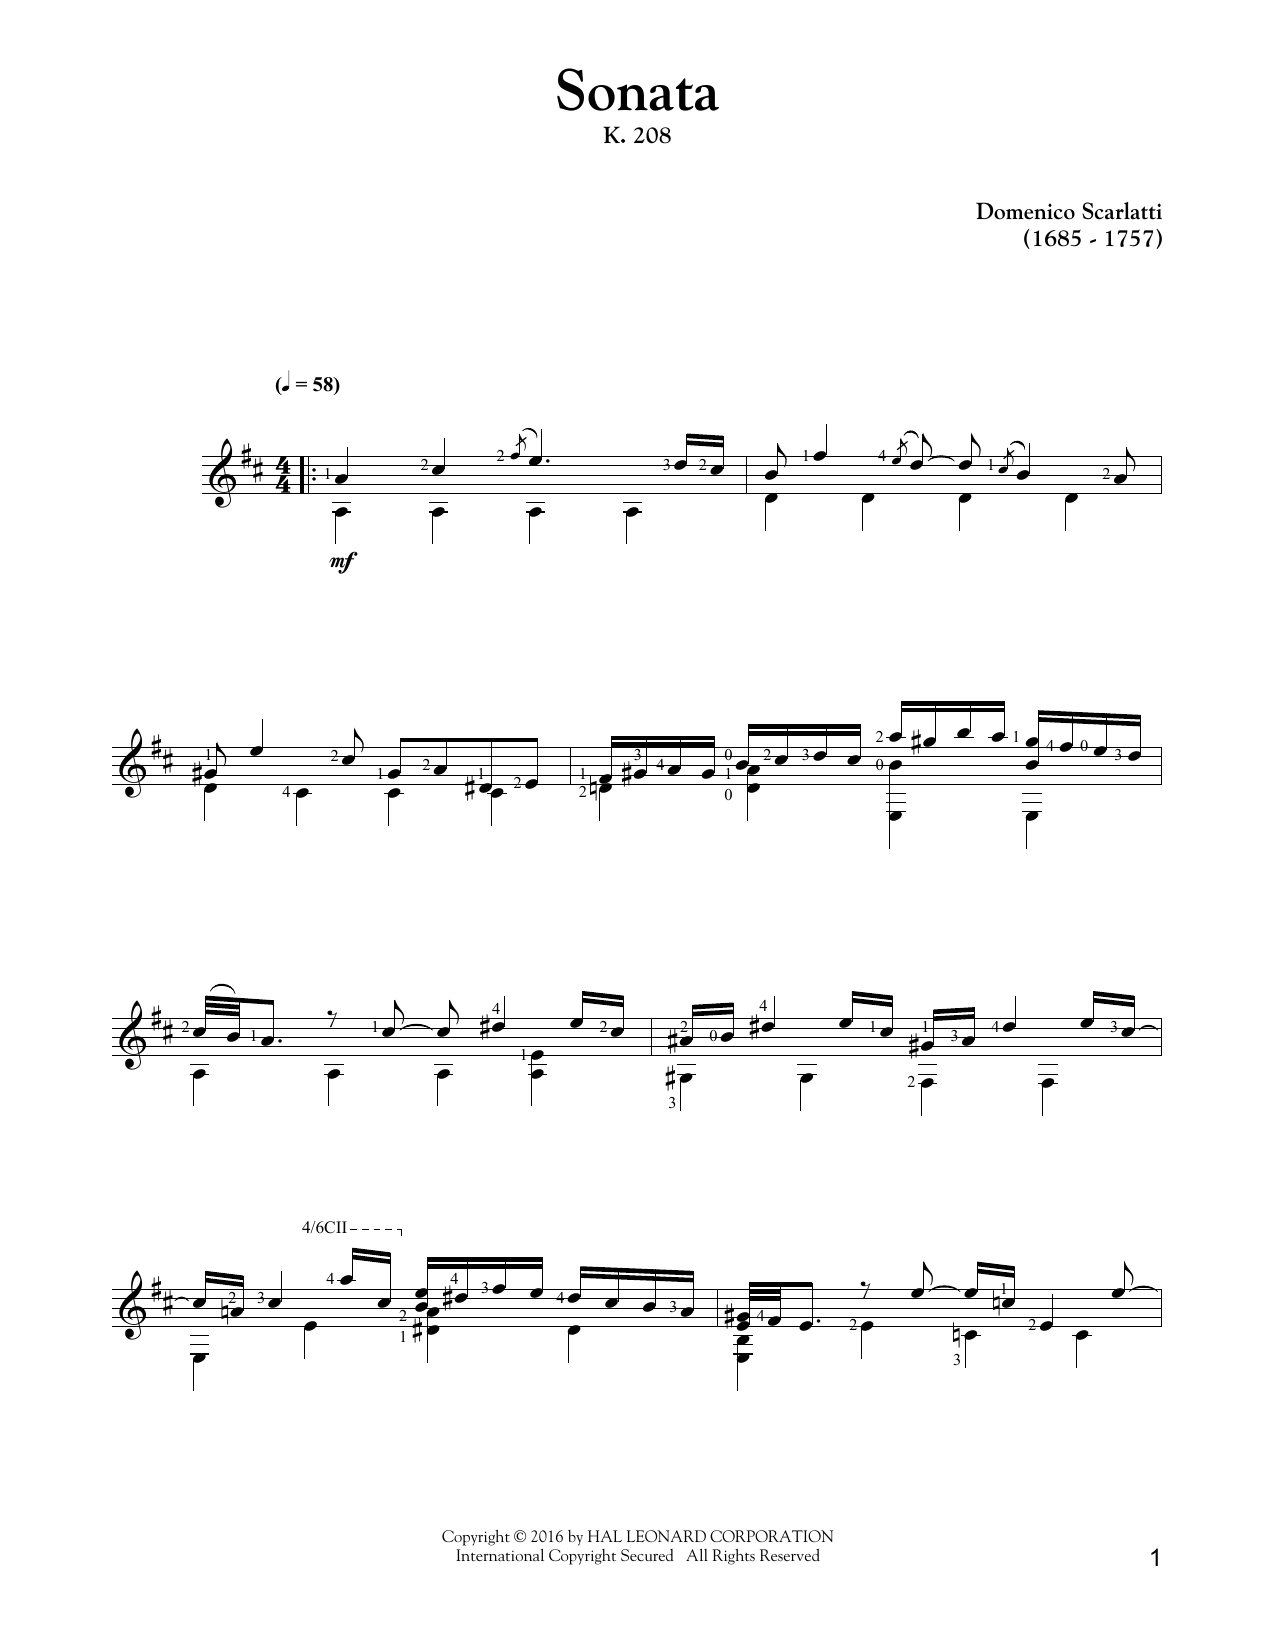 Domenico Scarlatti Sonata In G Major, K. 208 sheet music notes and chords arranged for Solo Guitar